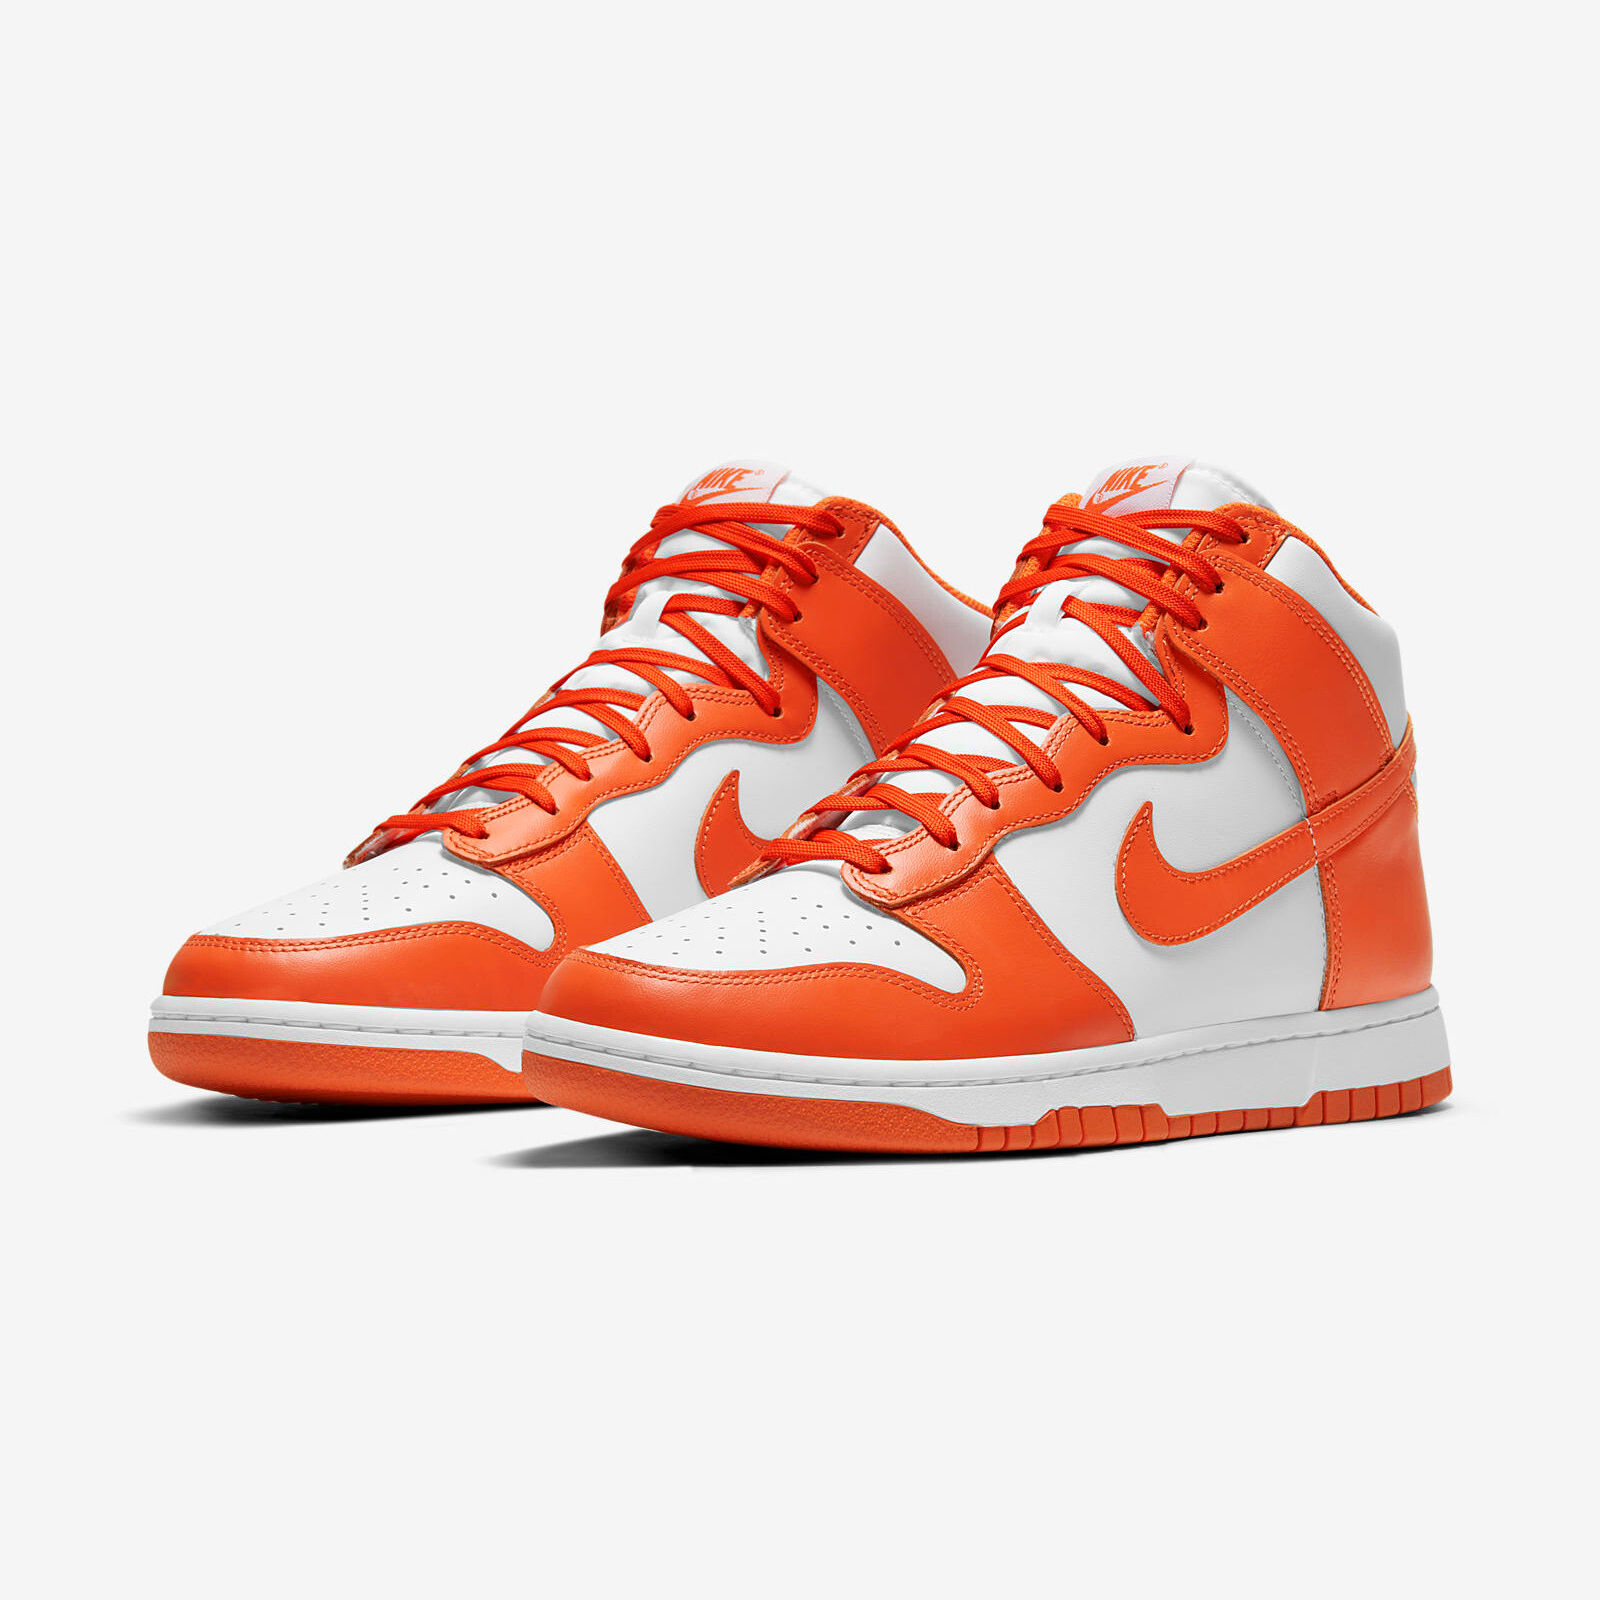 Nike Dunk High
Orange Blaze